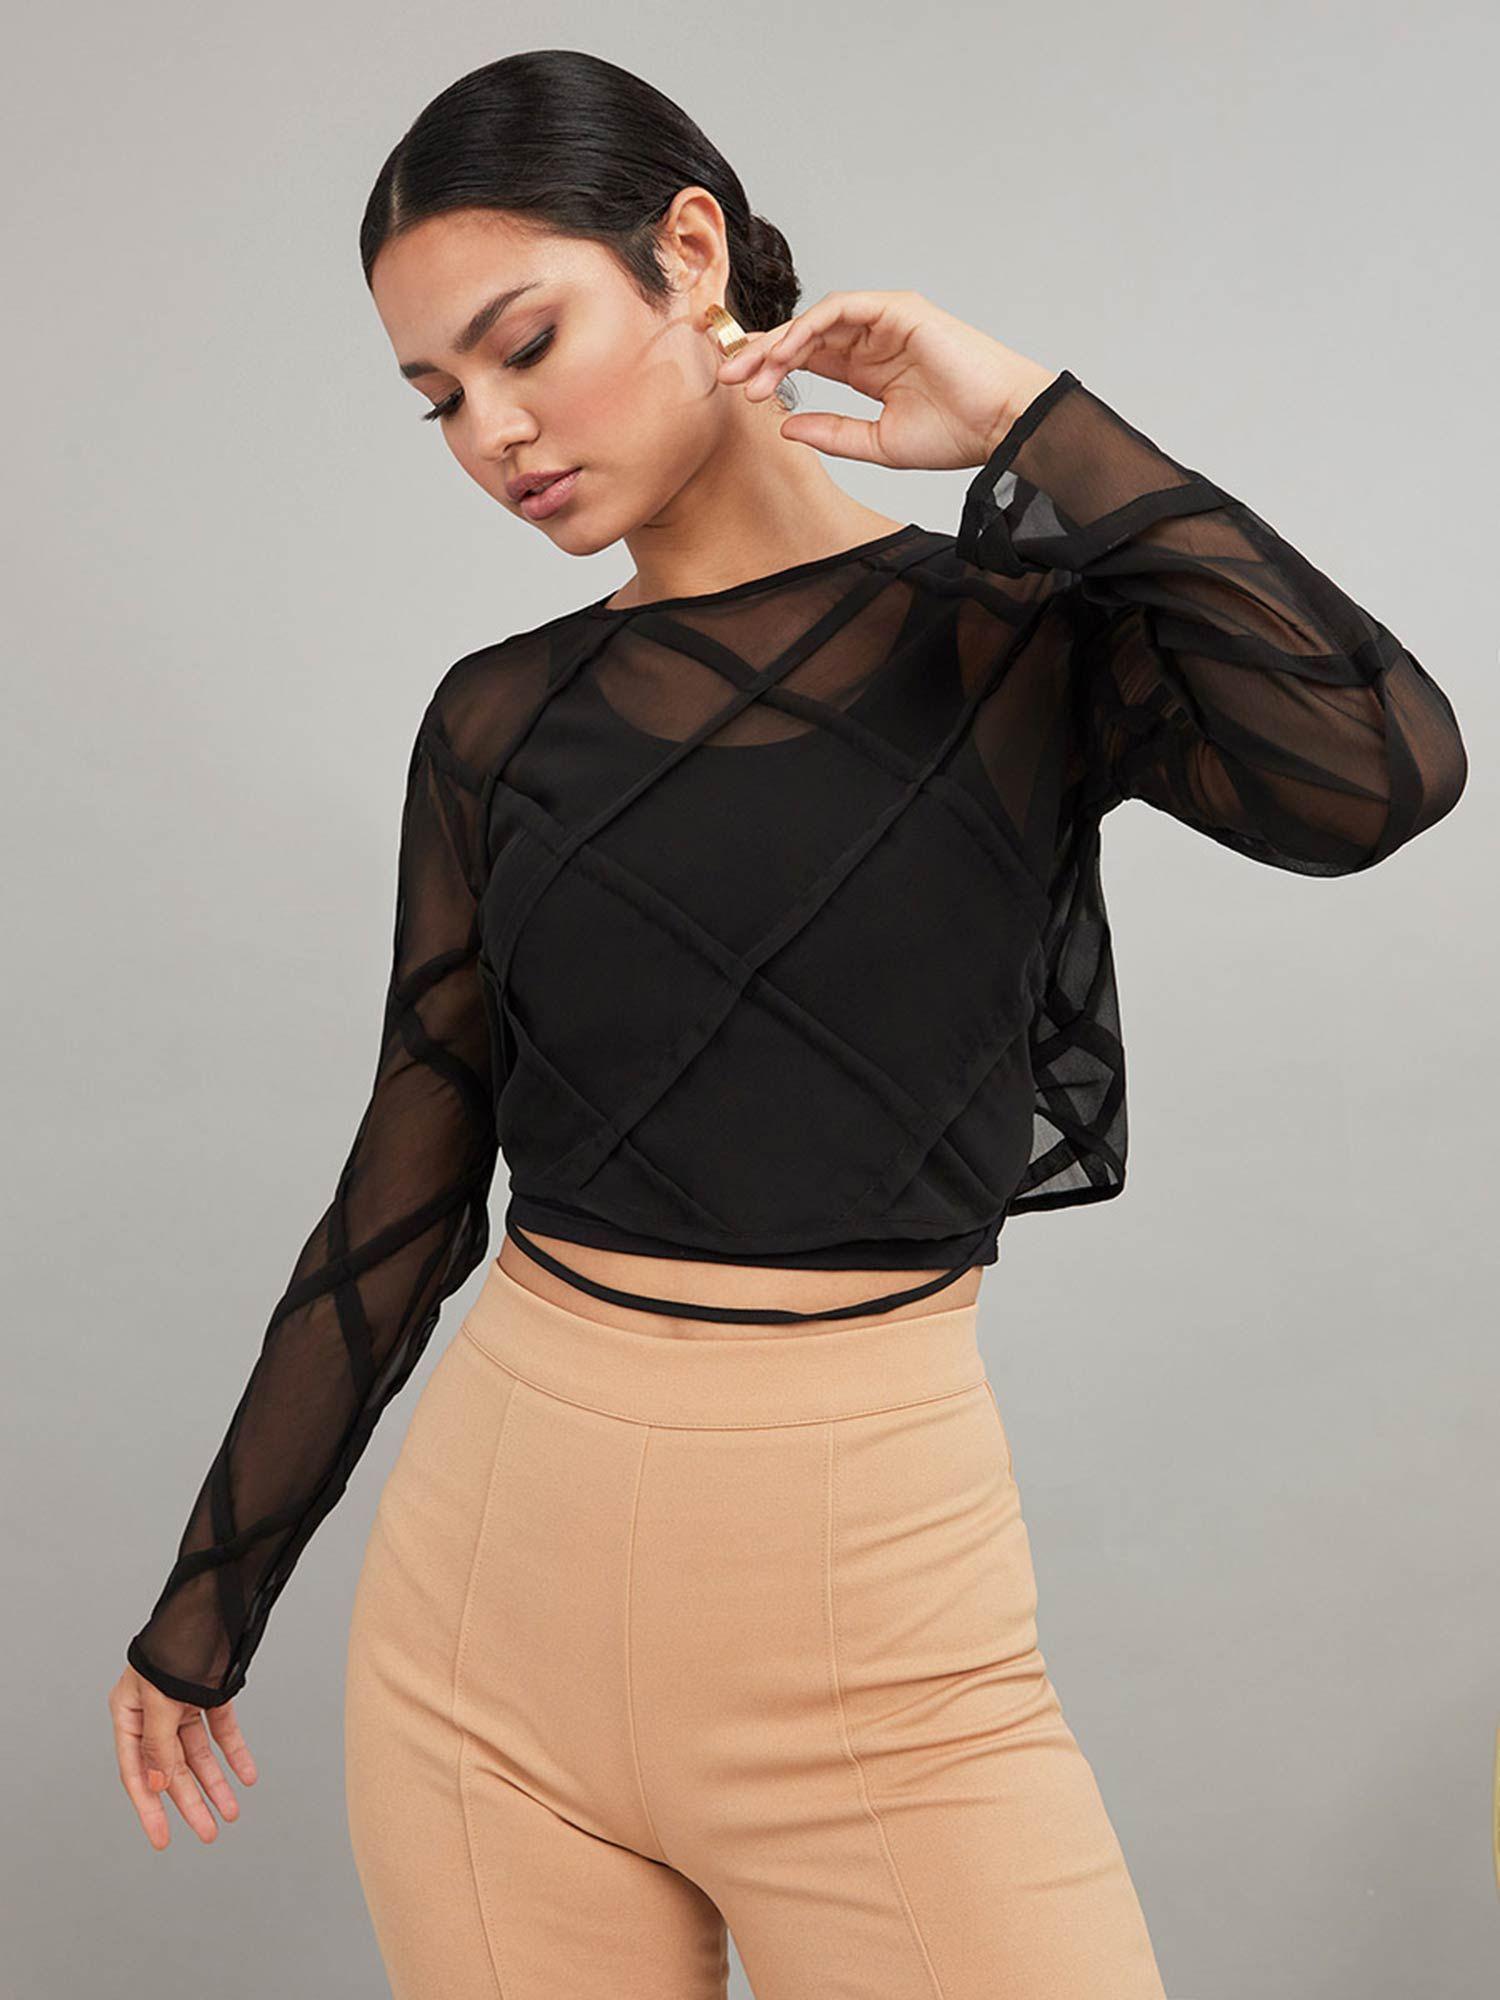 black-long-sleeves-crisscross-pattern-sheer-blouse-with-tie-detail